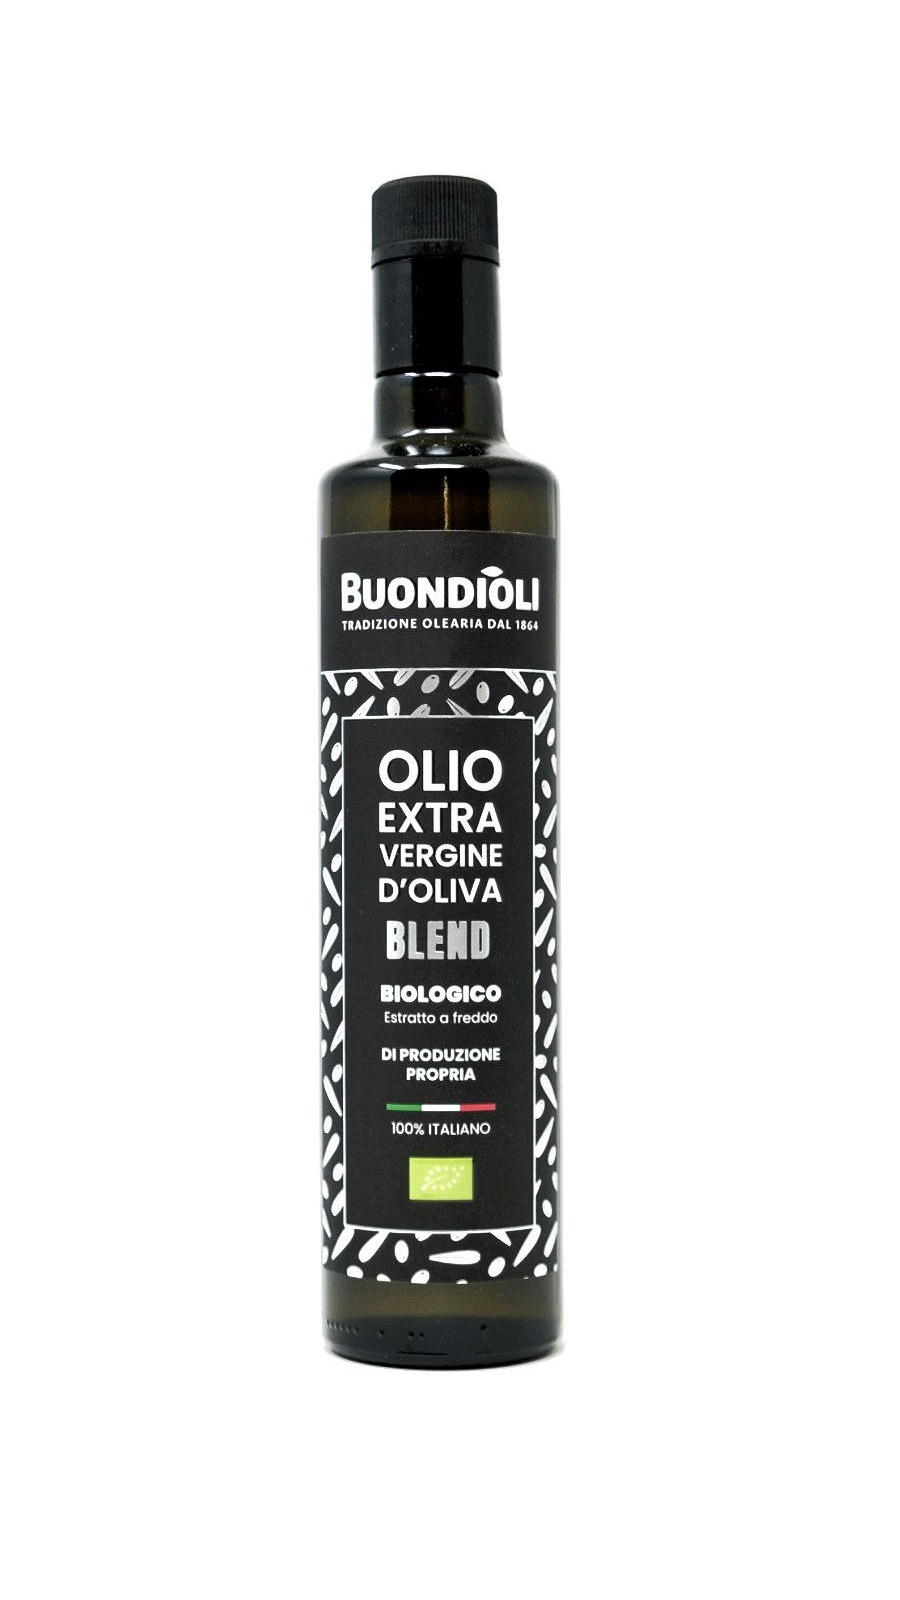 Blend Bio Oil Buondioli